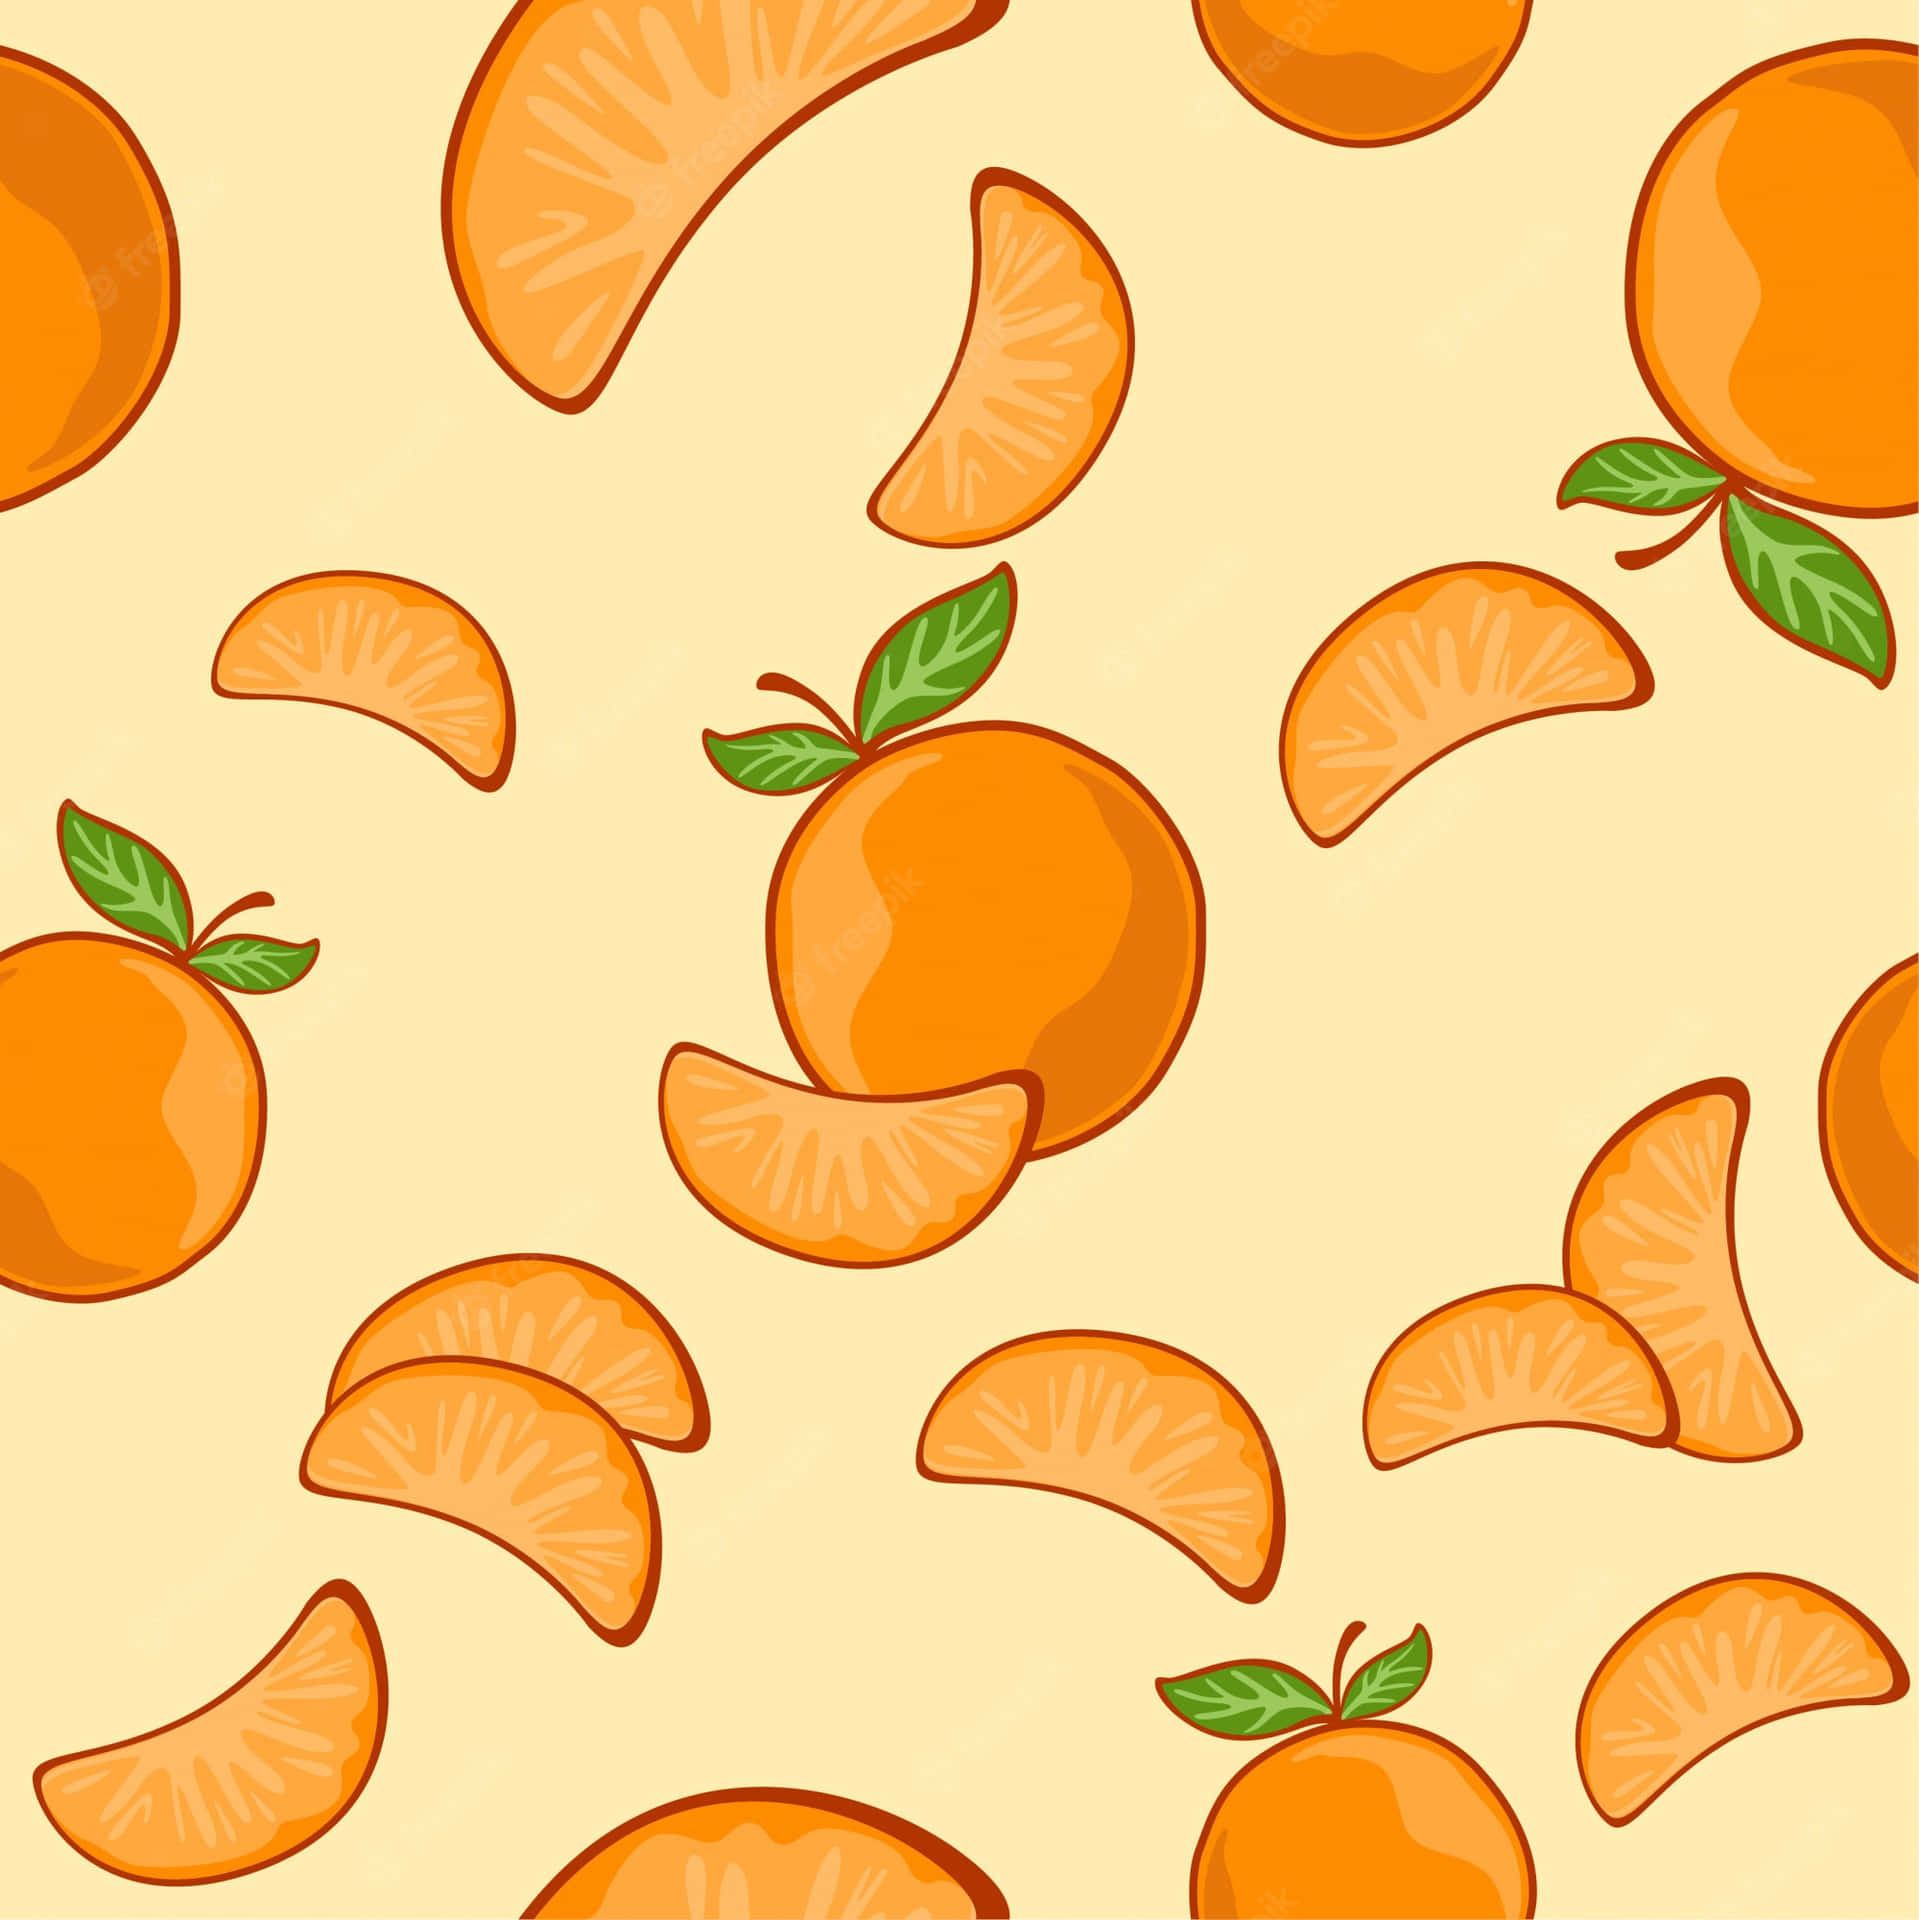 Adorable Orange Fox on a Playful Orange Background